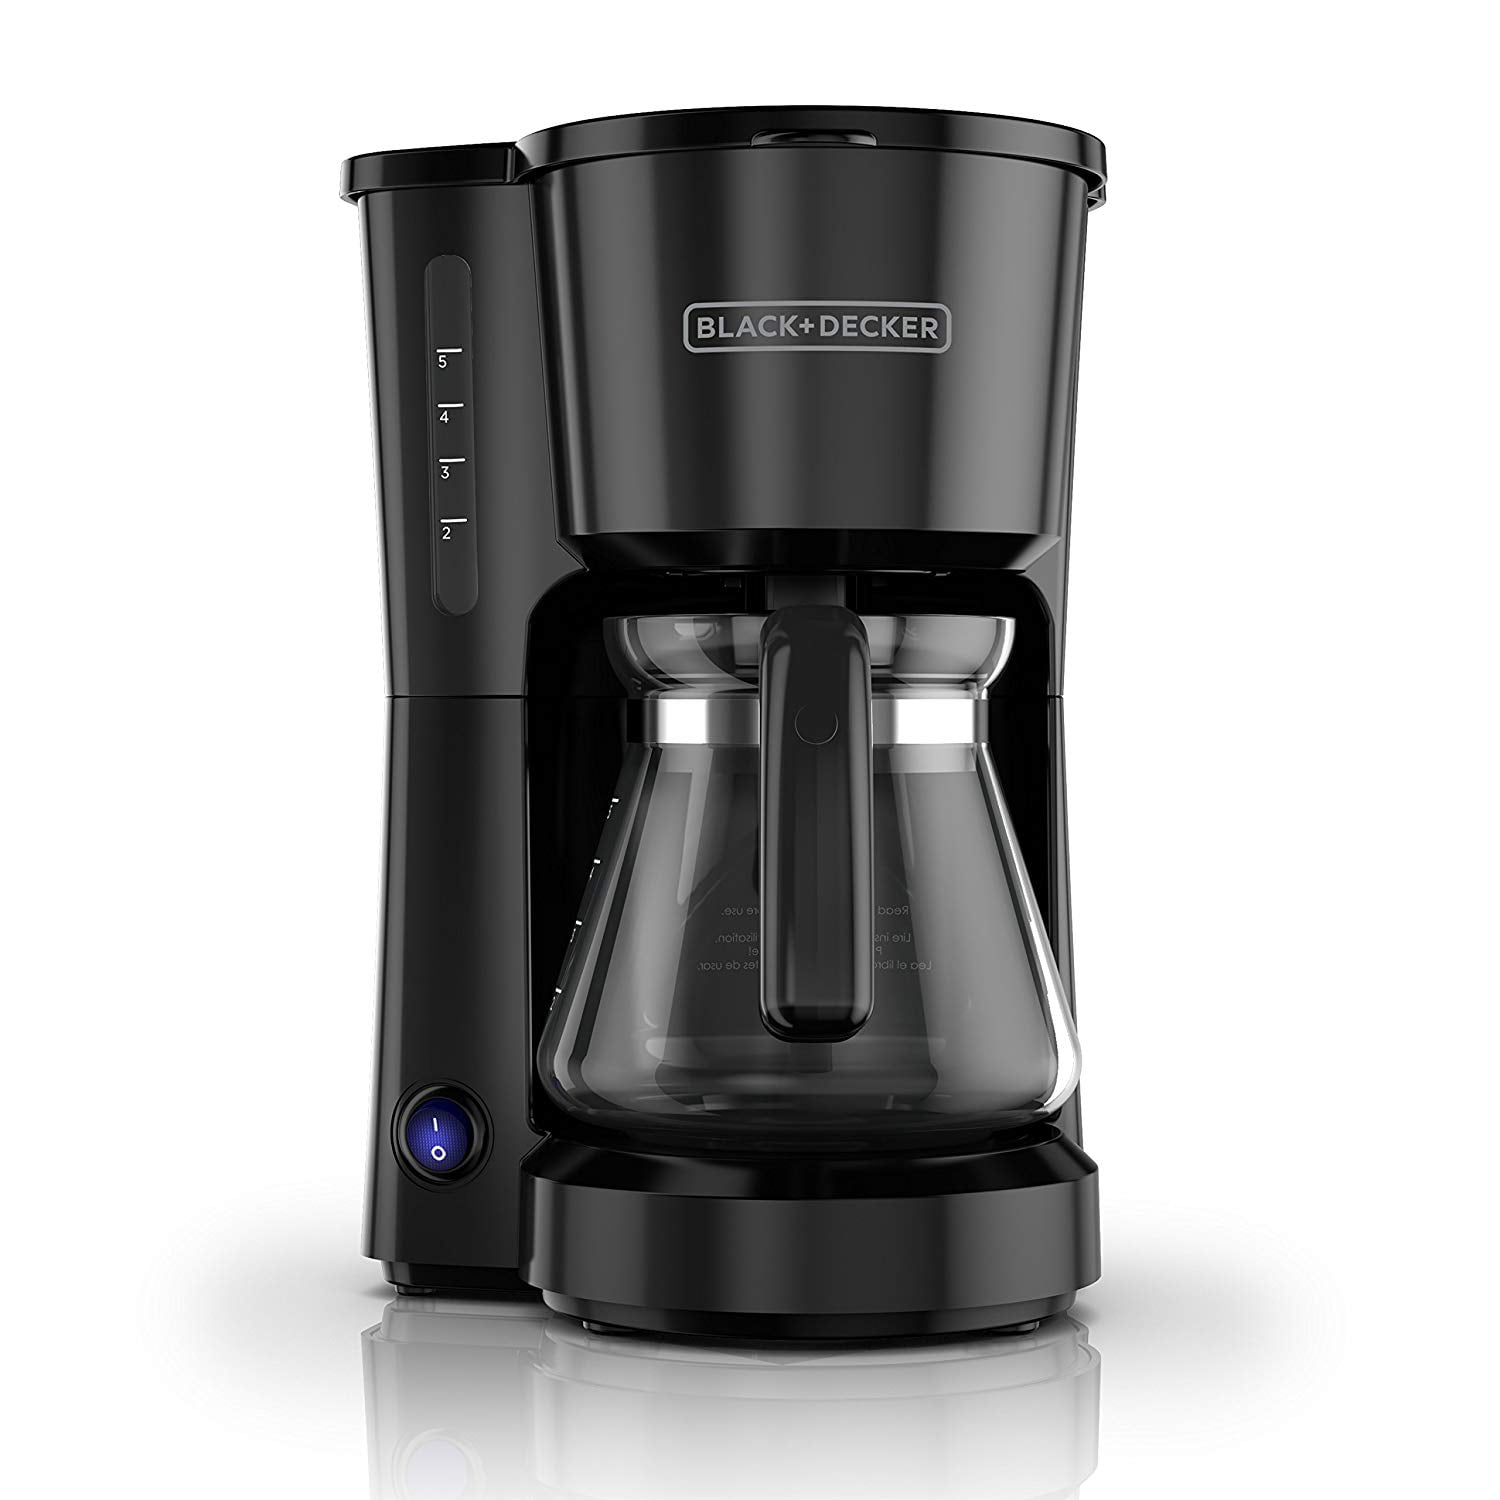 Black & decker prcbm5 coffee grinder for 220 volts